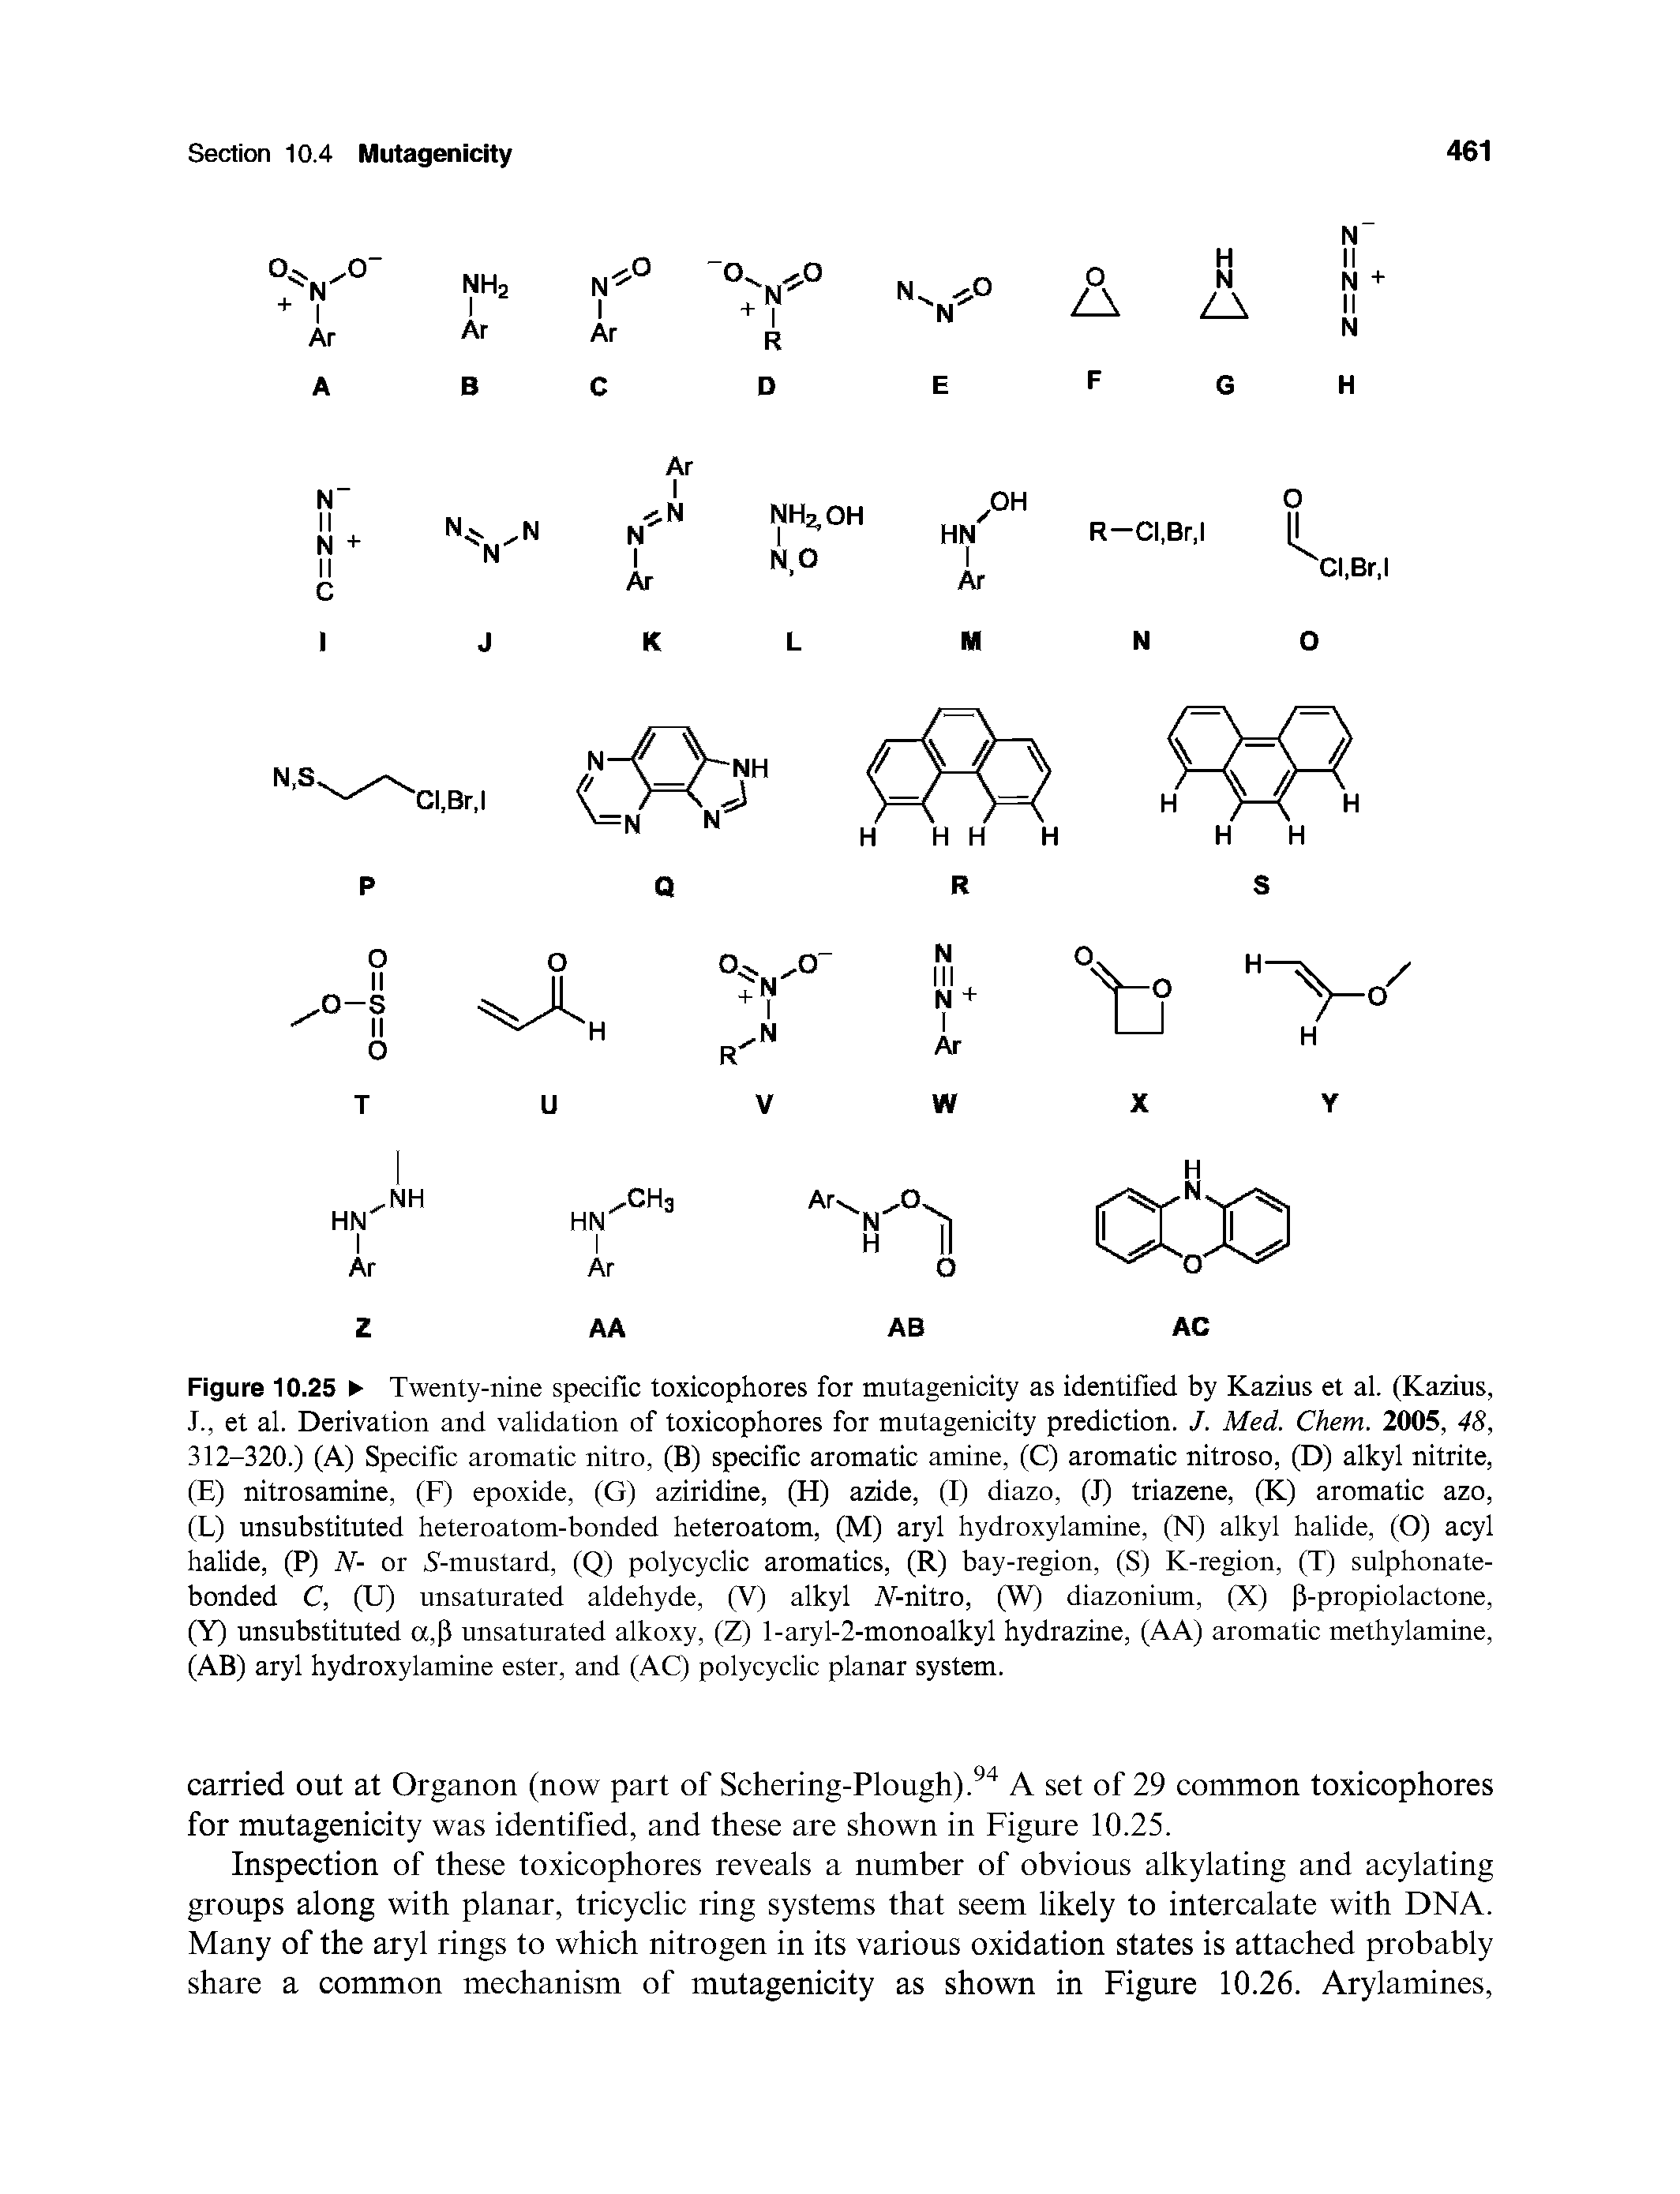 Figure 10.25 Twenty-nine specific toxicophores for mutagenicity as identified by Kazius el al. (Kazius, J-, et al. Derivation and validation of toxicophores for mutagenicity prediction. J. Med. Chem. 2005, 48, 312-320.) (A) Specific aromatic nitro, (B) specific aromatic amine, (C) aromatic nitroso, (D) alkyl nitrite, (E) nitrosamine, (F) epoxide, (G) aziridine, (H) azide, (I) diazo, (J) triazene, (K) aromatic azo, (L) unsubstituted heteroatom-bonded heteroatom, (M) aryl hydroxylamine, (N) alkyl halide, (O) acyl halide, (P) N- or 5-mustard, (Q) polycyclic aromatics, (R) bay-region, (S) K-region, (T) sulphonate-bonded C, (U) unsaturated aldehyde, (V) alkyl A-nitro, (W) diazonium, (X) p-propiolactone, (Y) unsubstituted a,p unsaturated alkoxy, (Z) l-aryl-2-monoalkyl hydrazine, (AA) aromatic methylamine, (AB) aryl hydroxylamine ester, and (AC) polycyclic planar system.